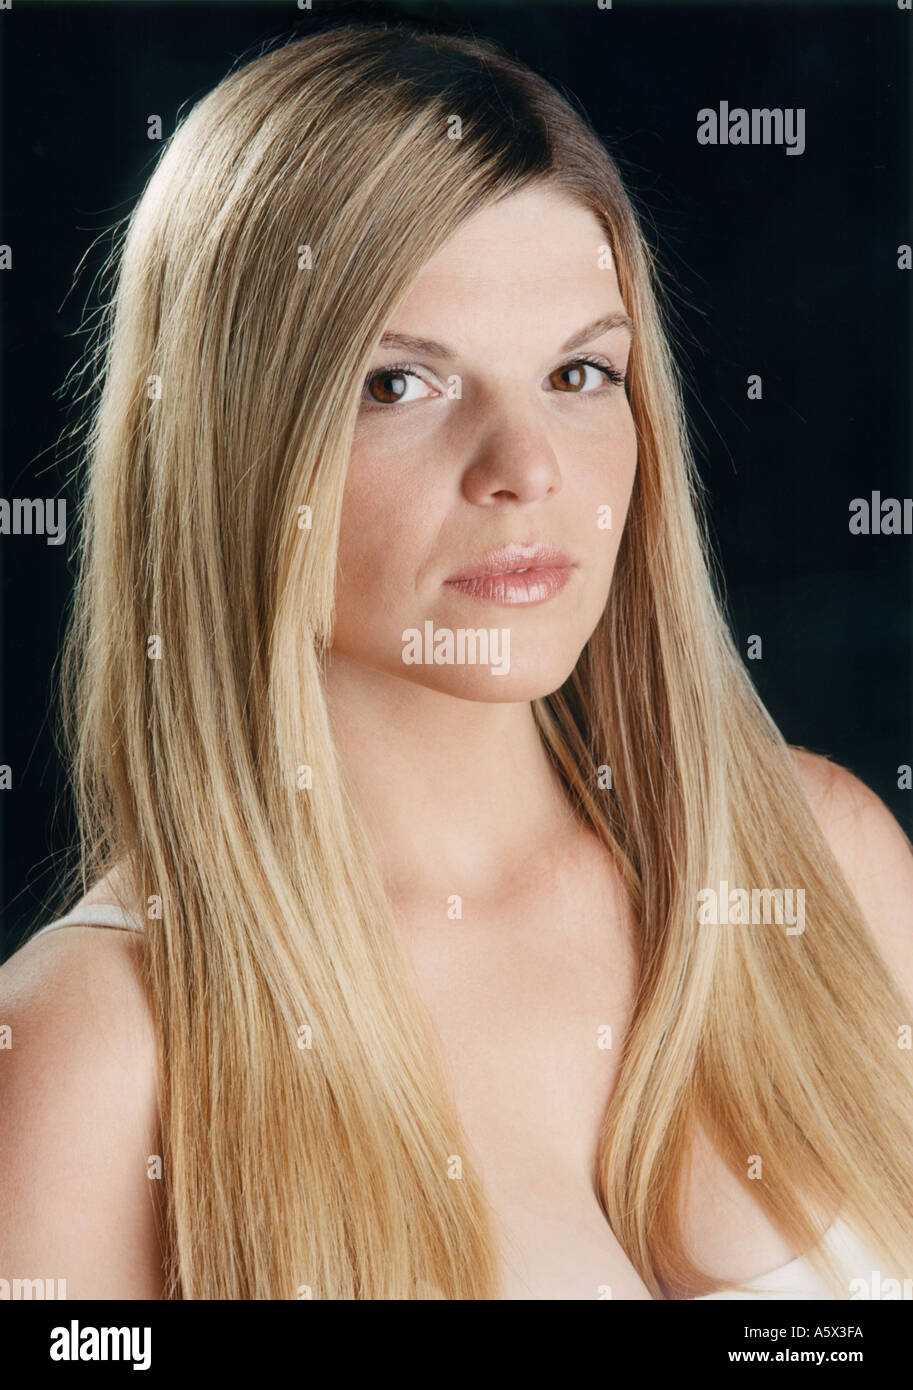 Portrait of a Blonde Caucasian Girl Stock Photo